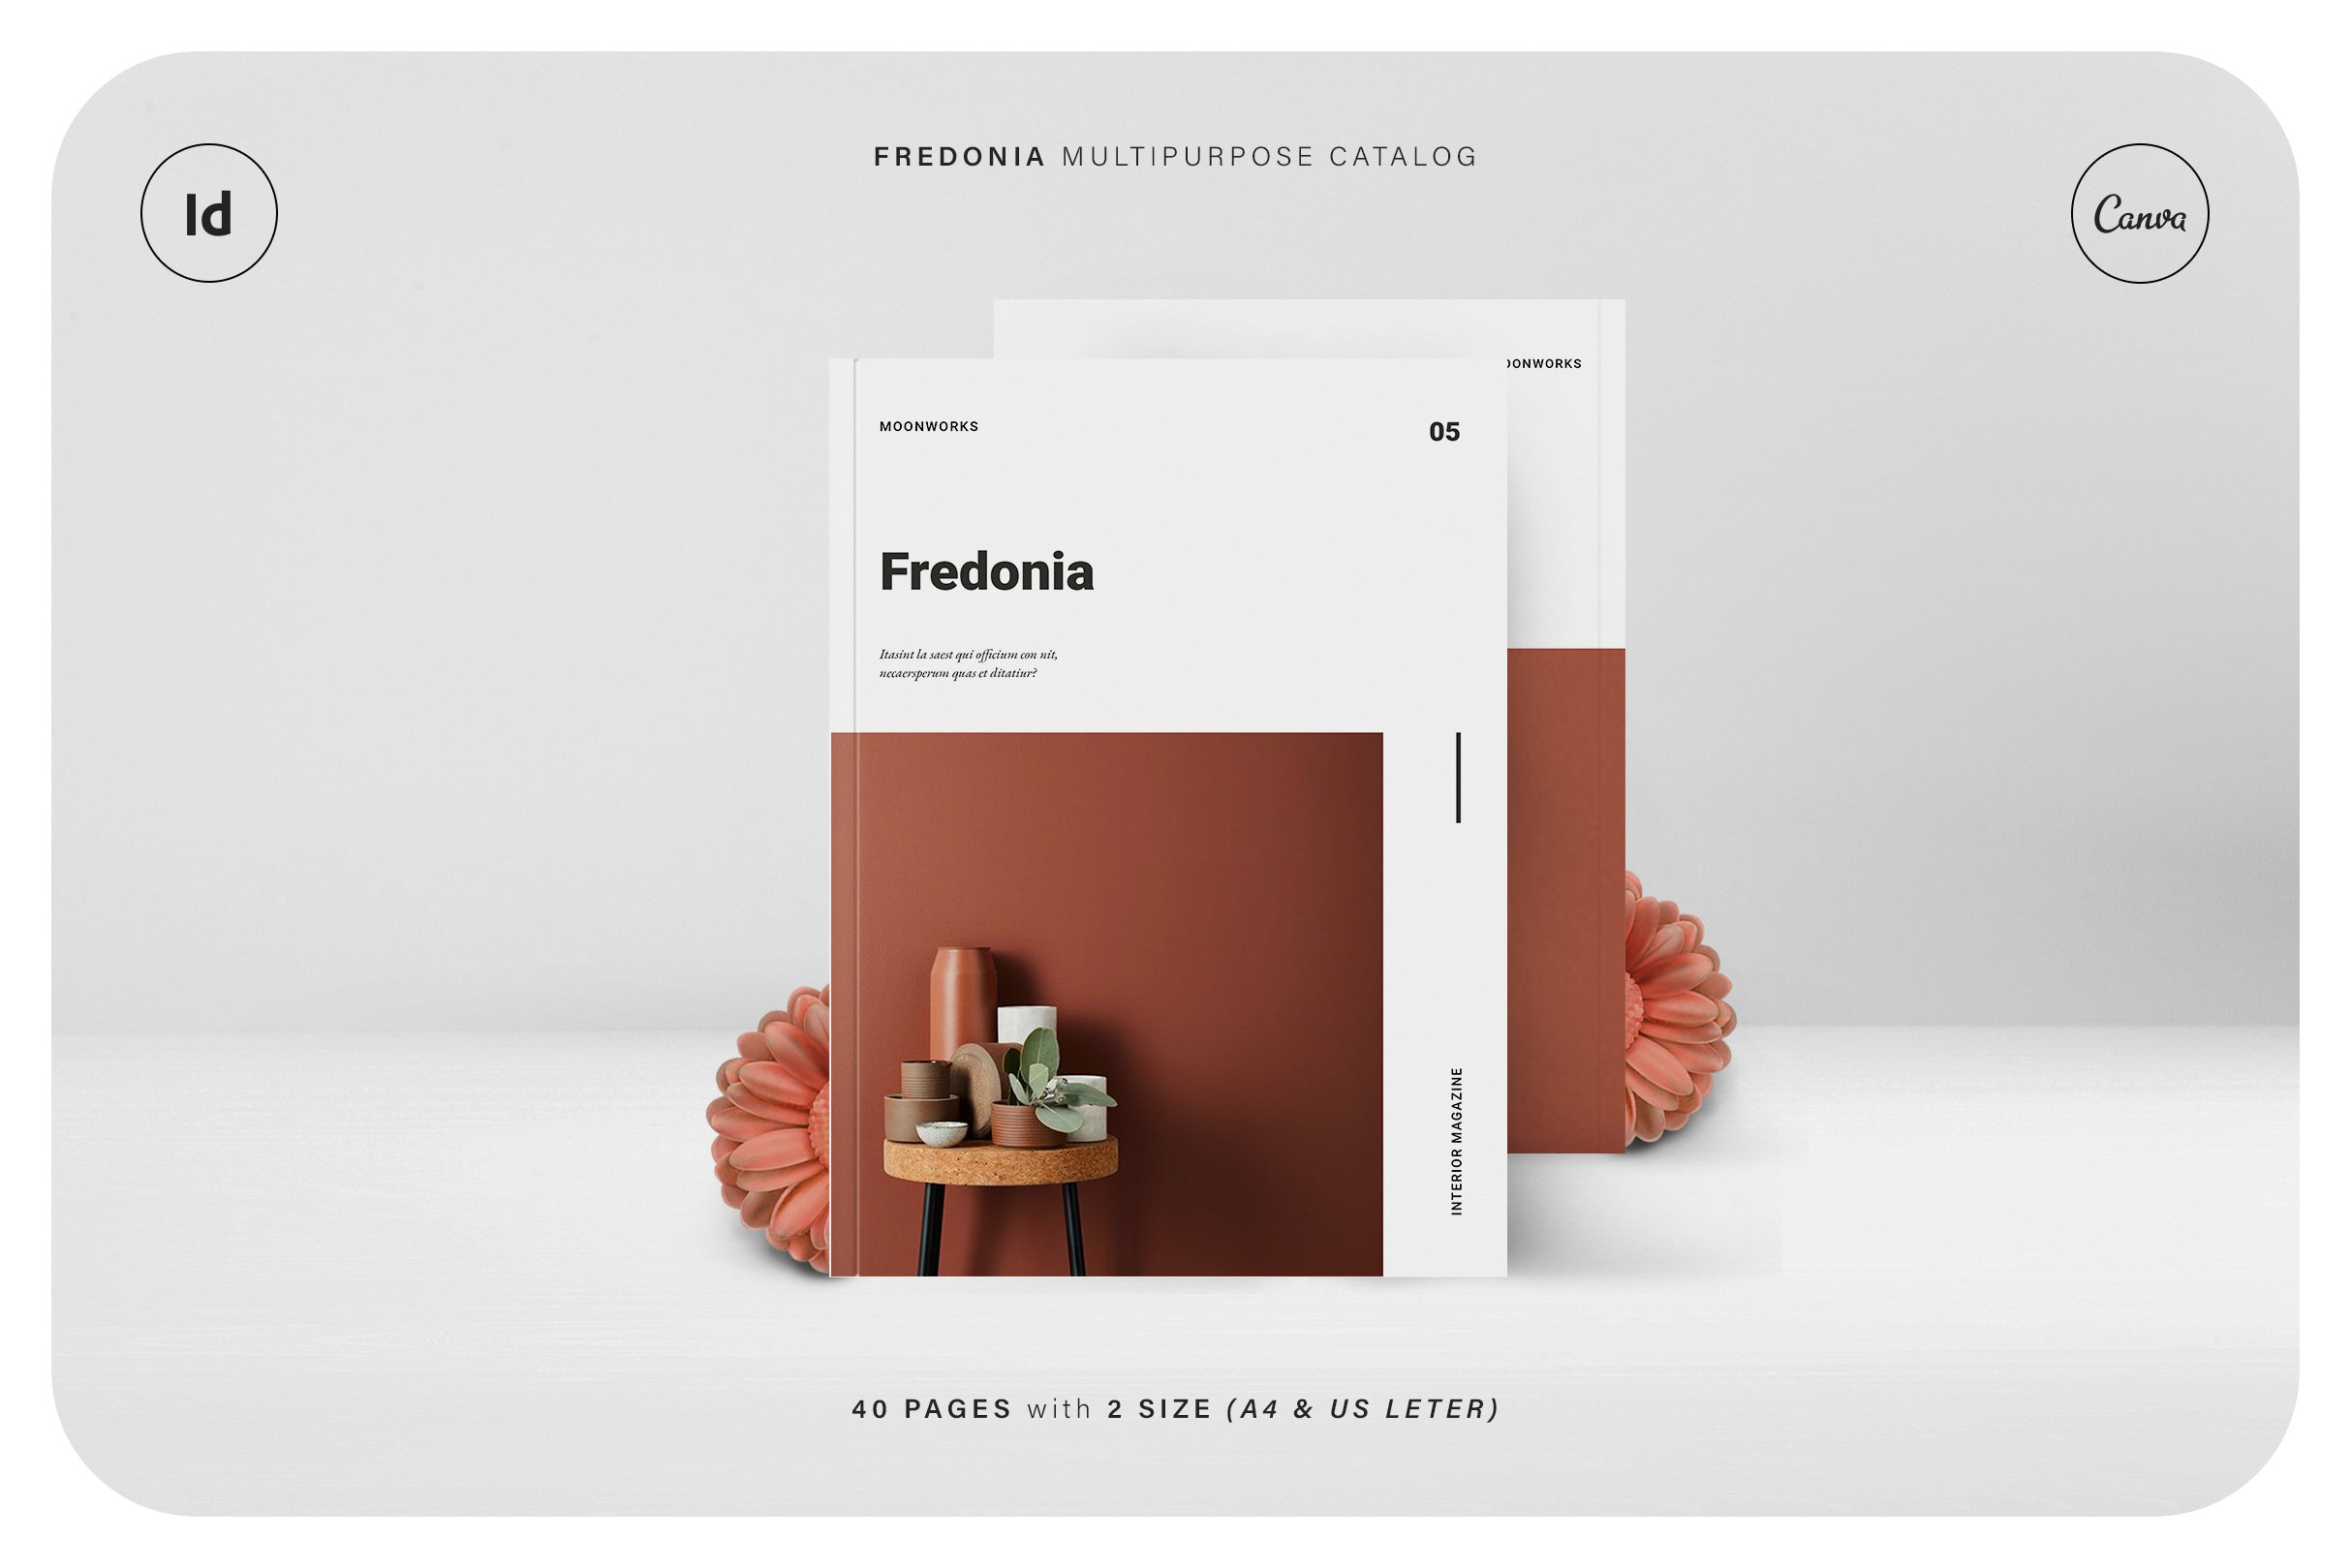 FREDONIA Multipurpose Catalog cover image.